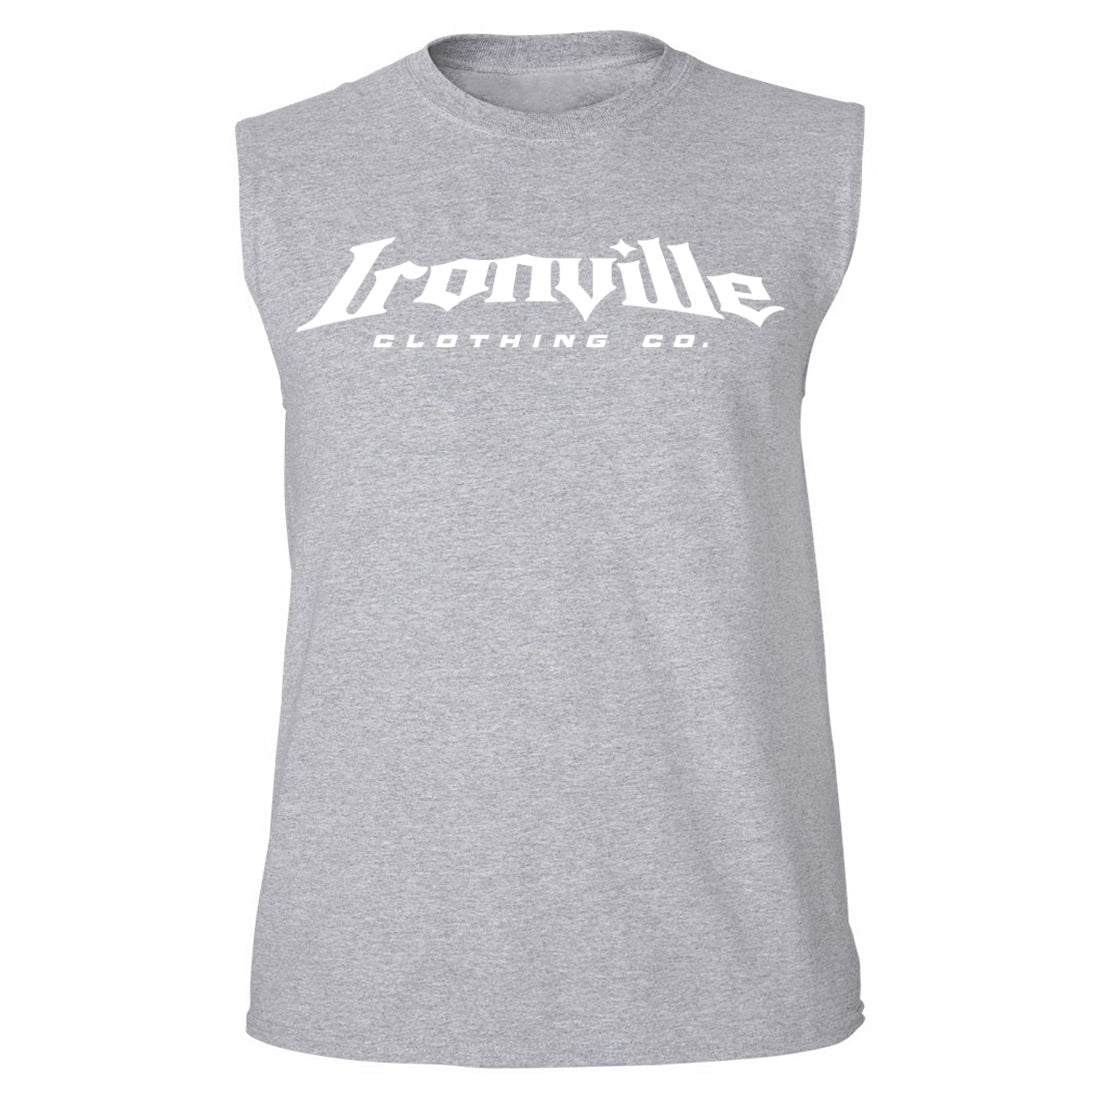 Ironville STRENGTH STRUGGLE Sleeveless Muscle T-shirt